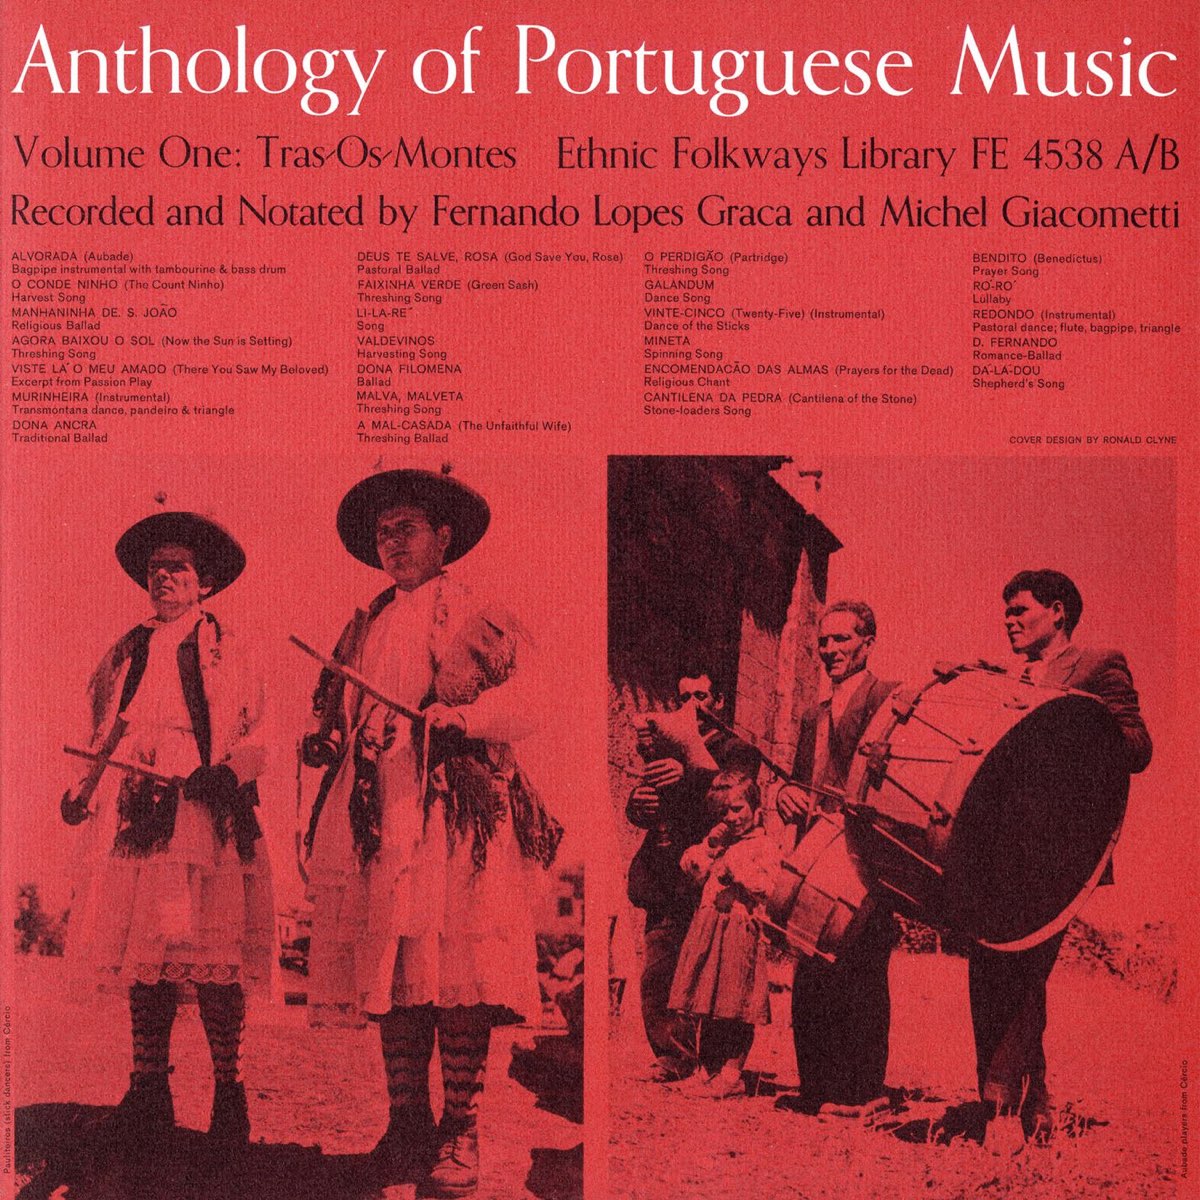 Portugal Instrumental beautiful Music from Portugal фото диска. Песня романс баллада